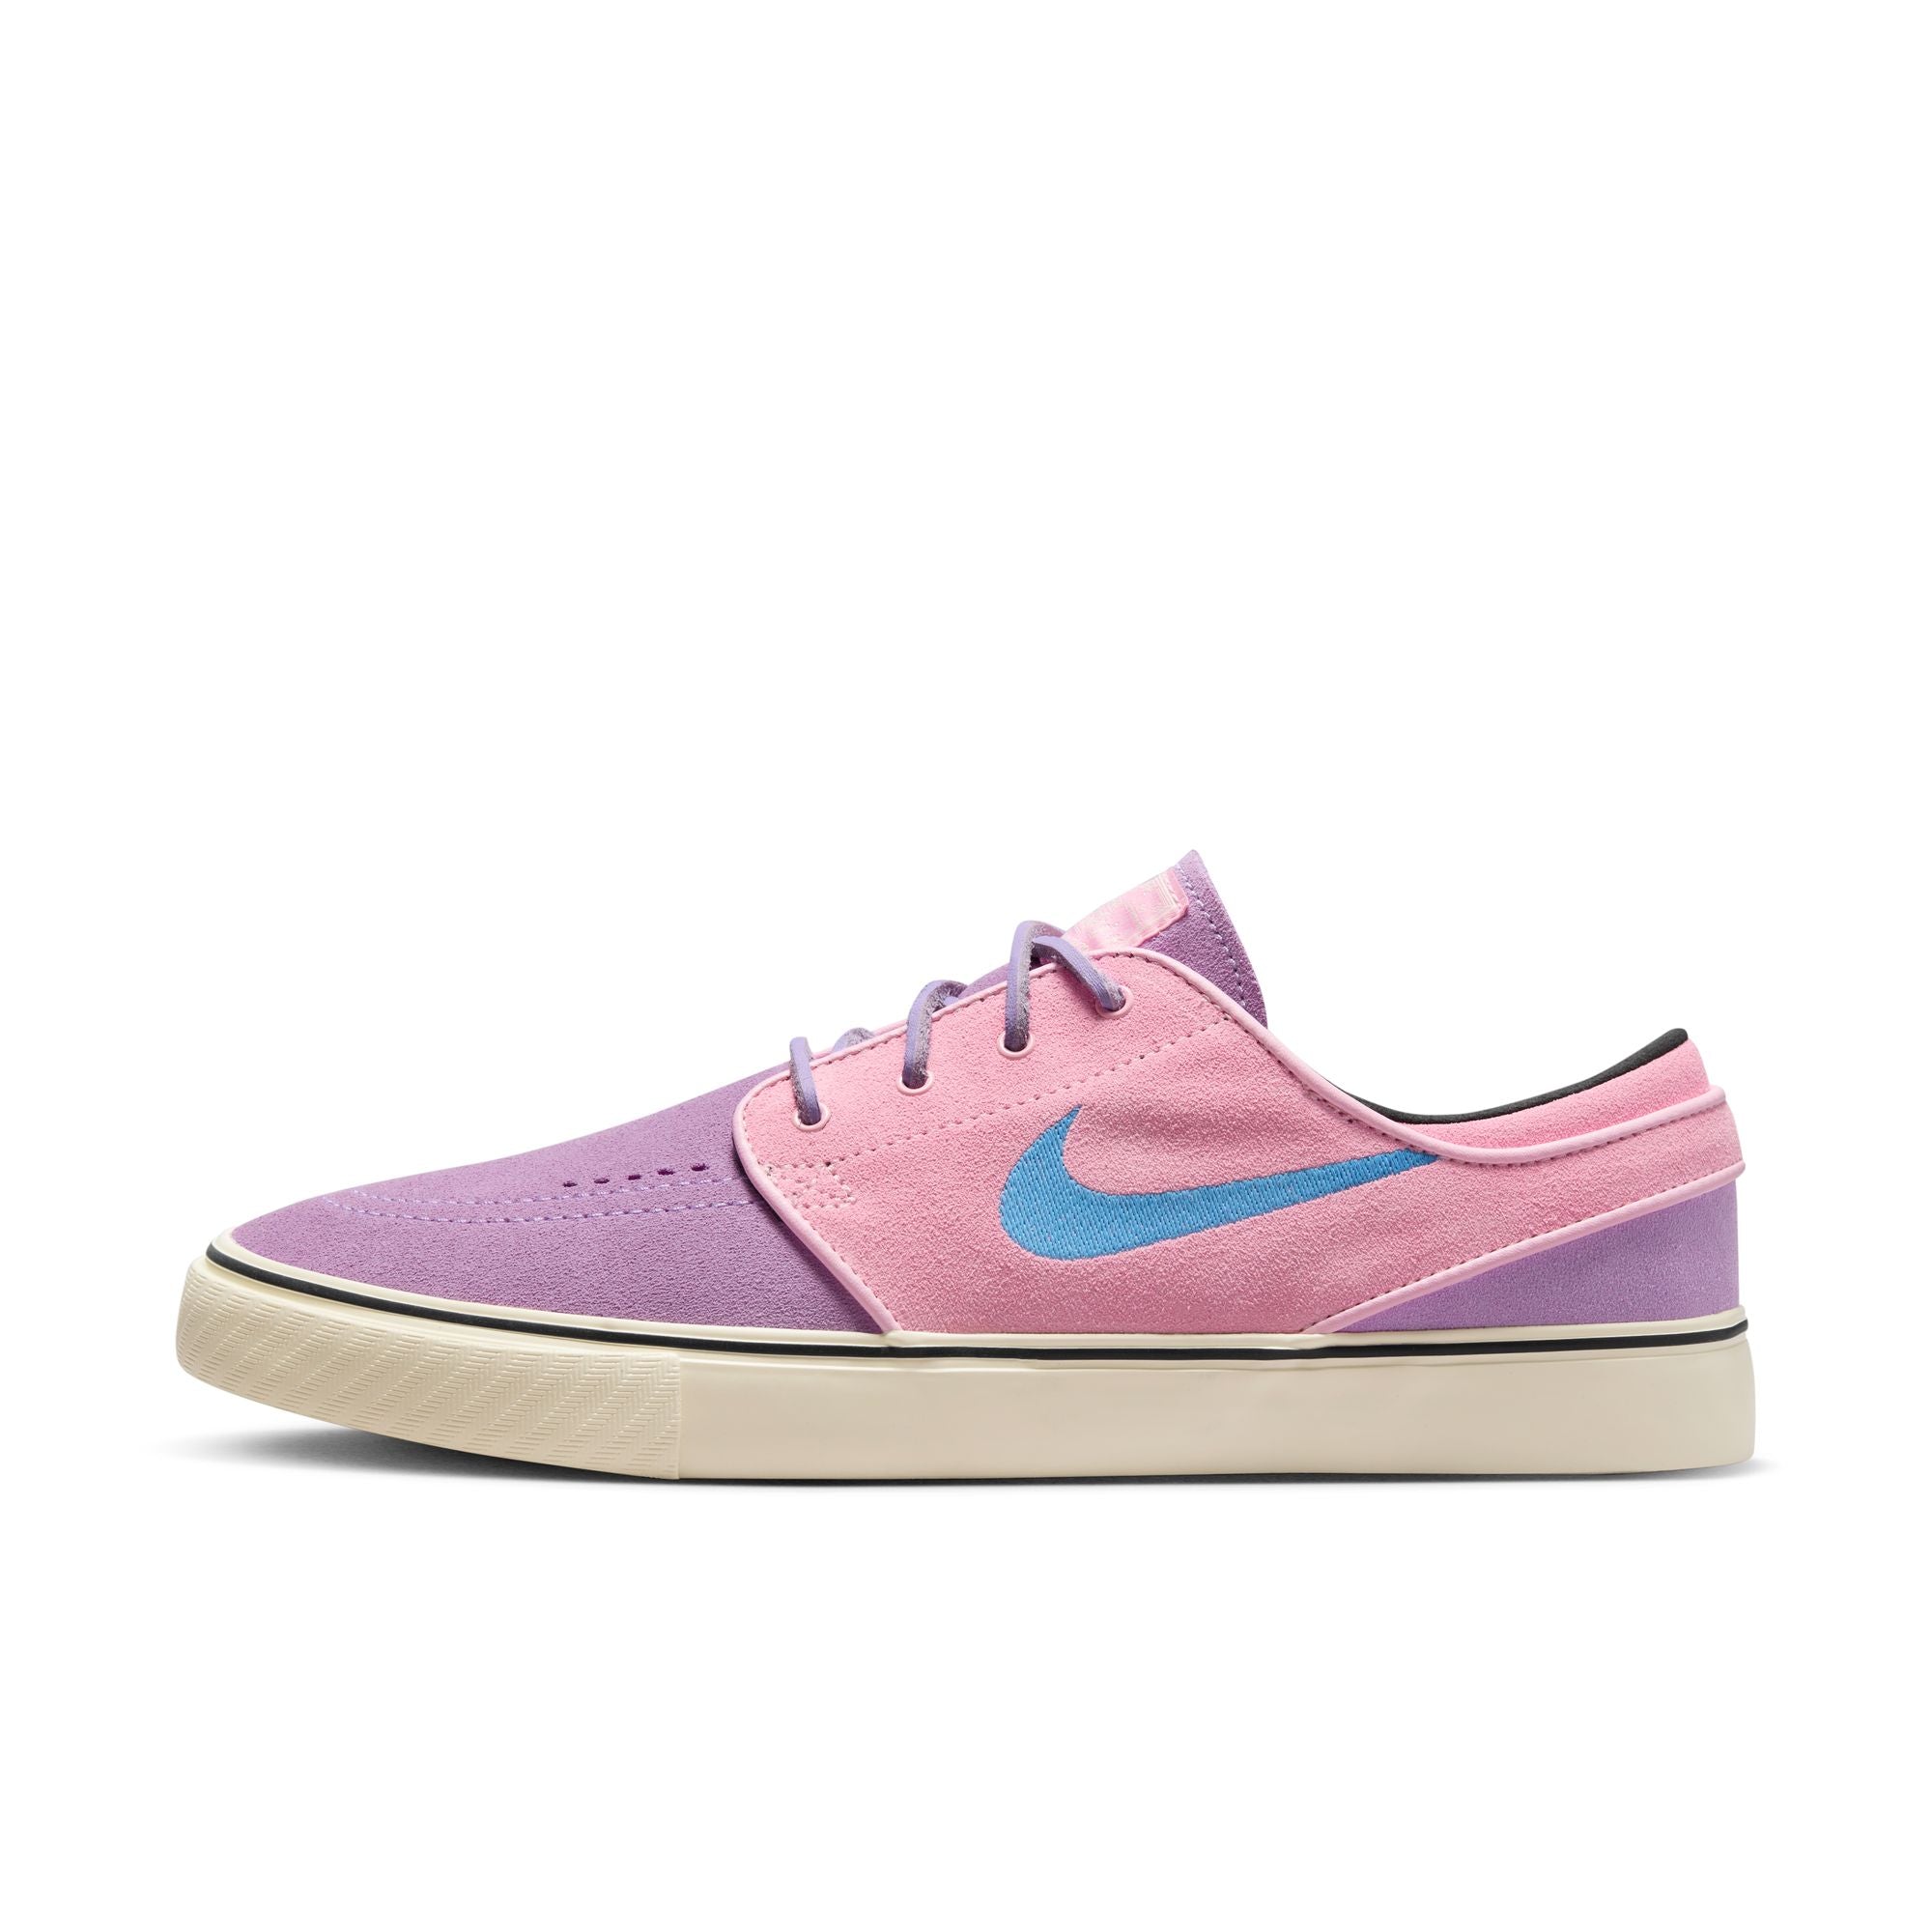 Nike SB Janoski OG+ Low Shoes - Lilac/Noise Aqua-Soft Pink